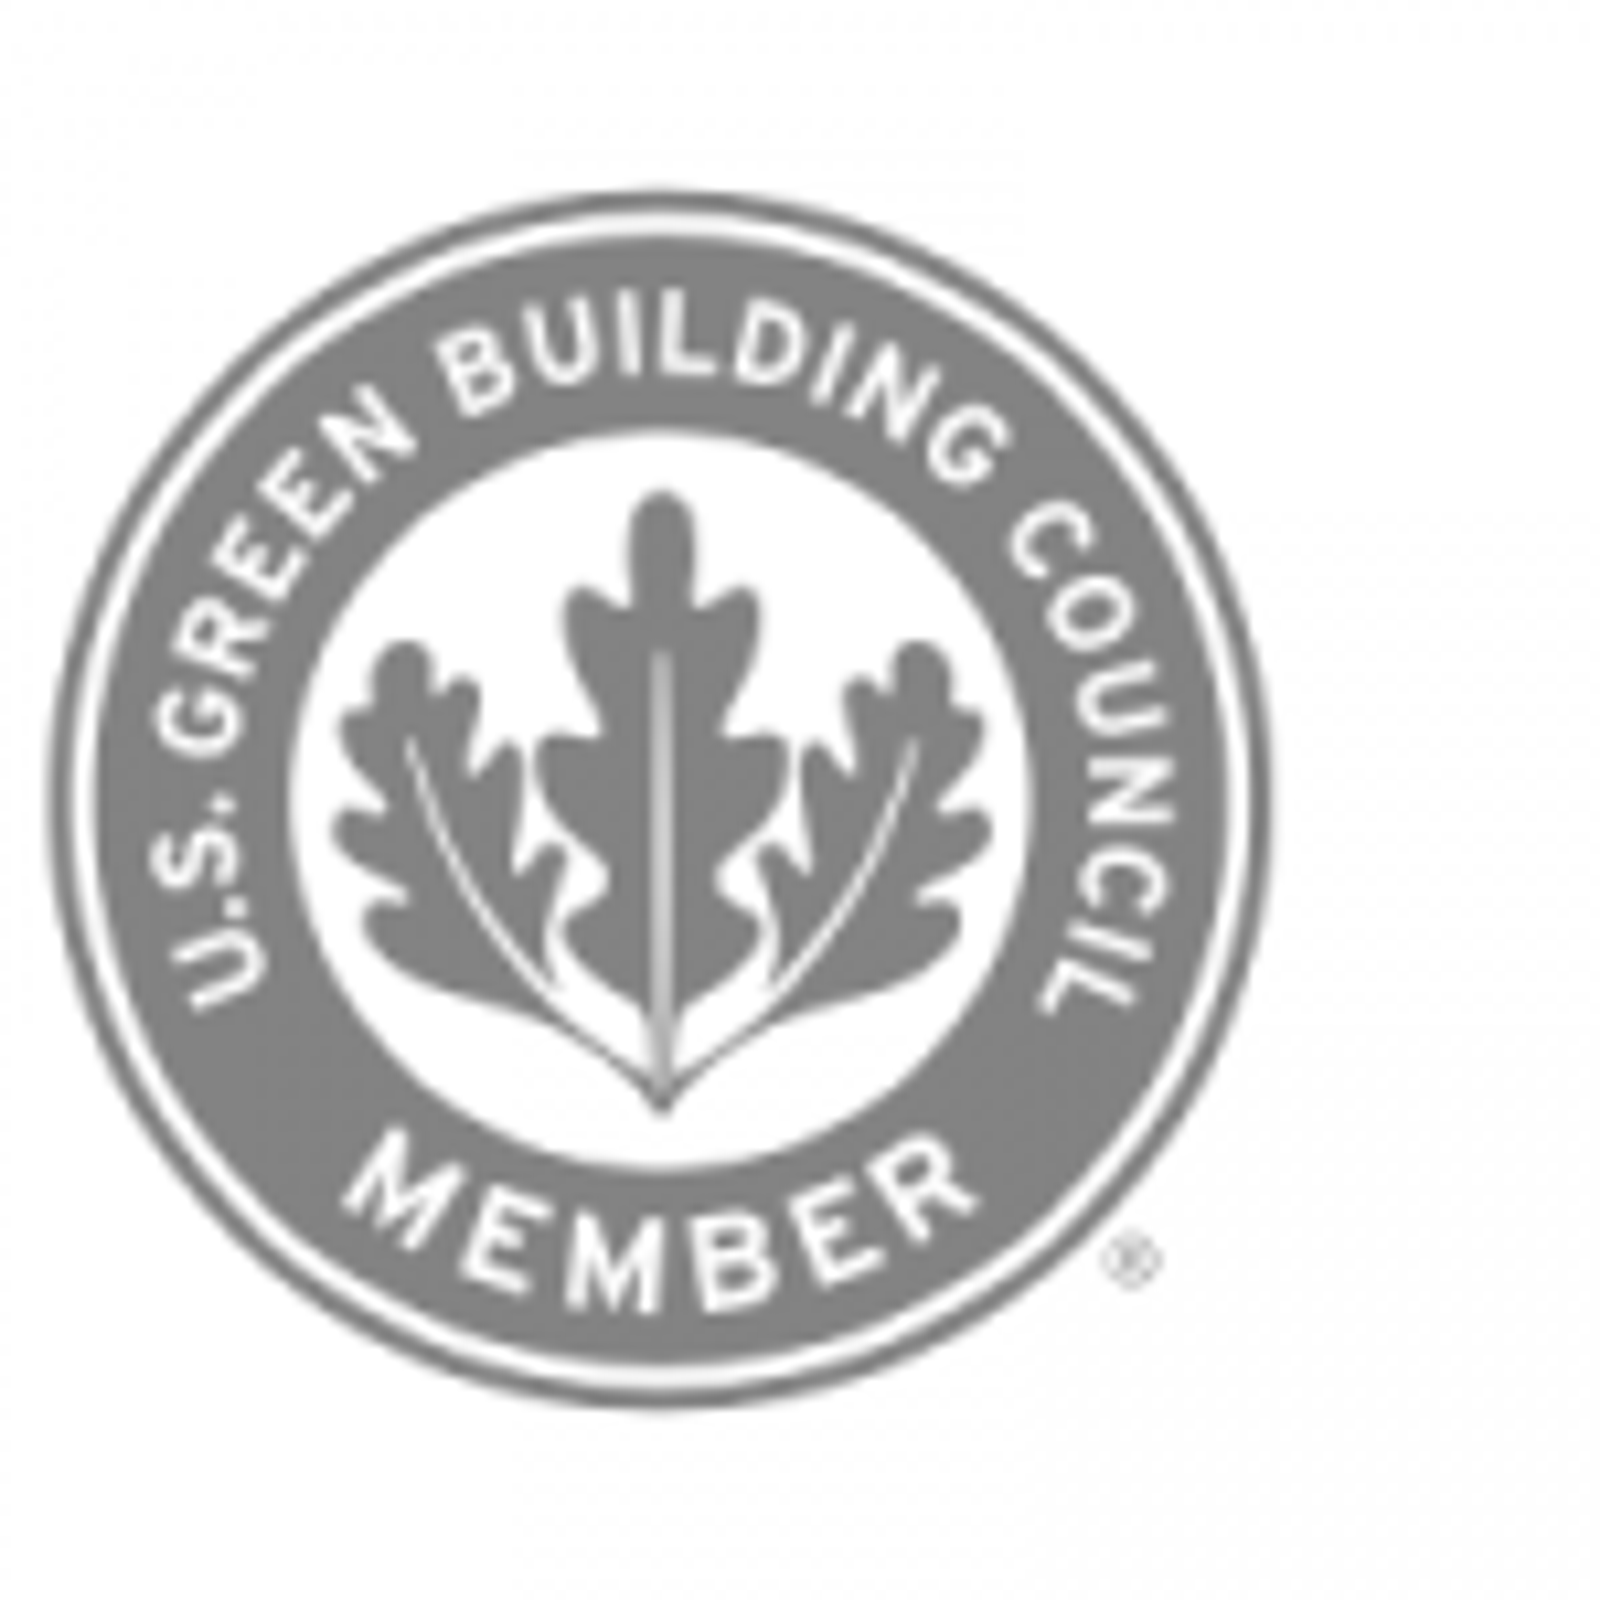 green building council member logo